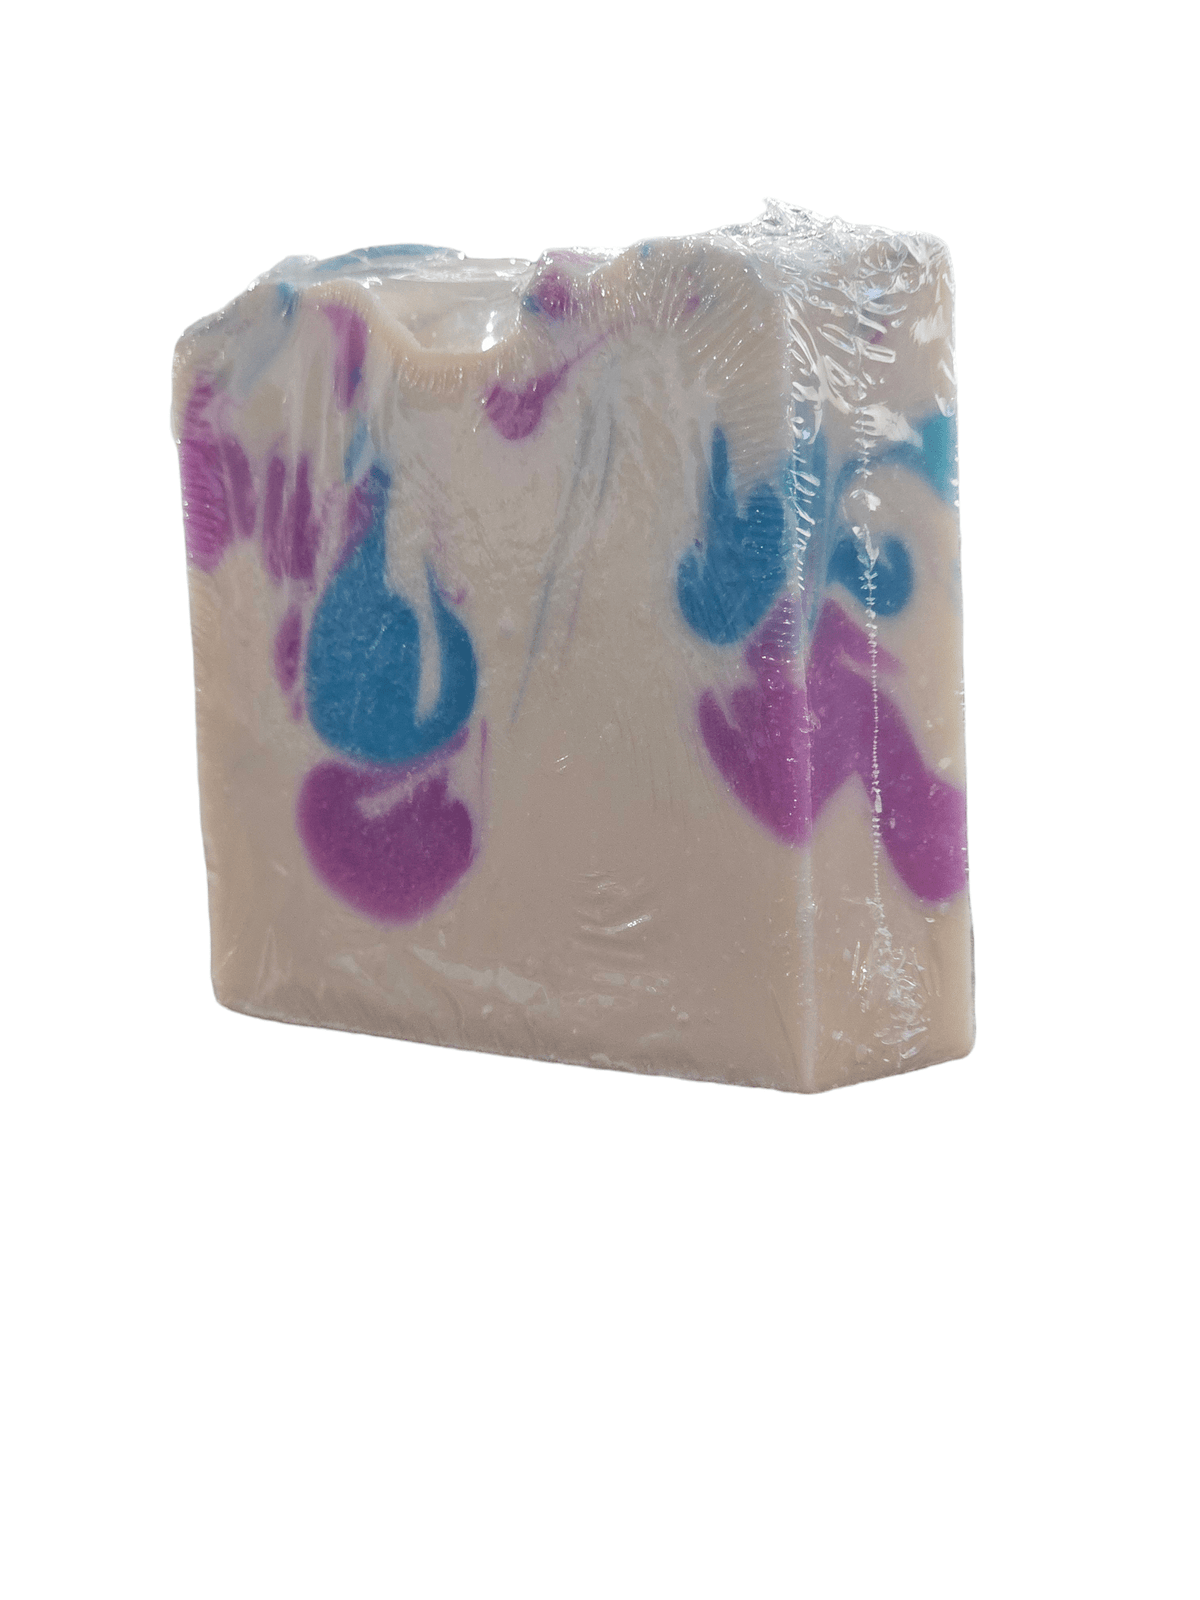 Midnight Raspberry Mystique Soap | Citrus & Black Raspberry Blend | Enigmatic Aroma by Spooklight Soap Co.